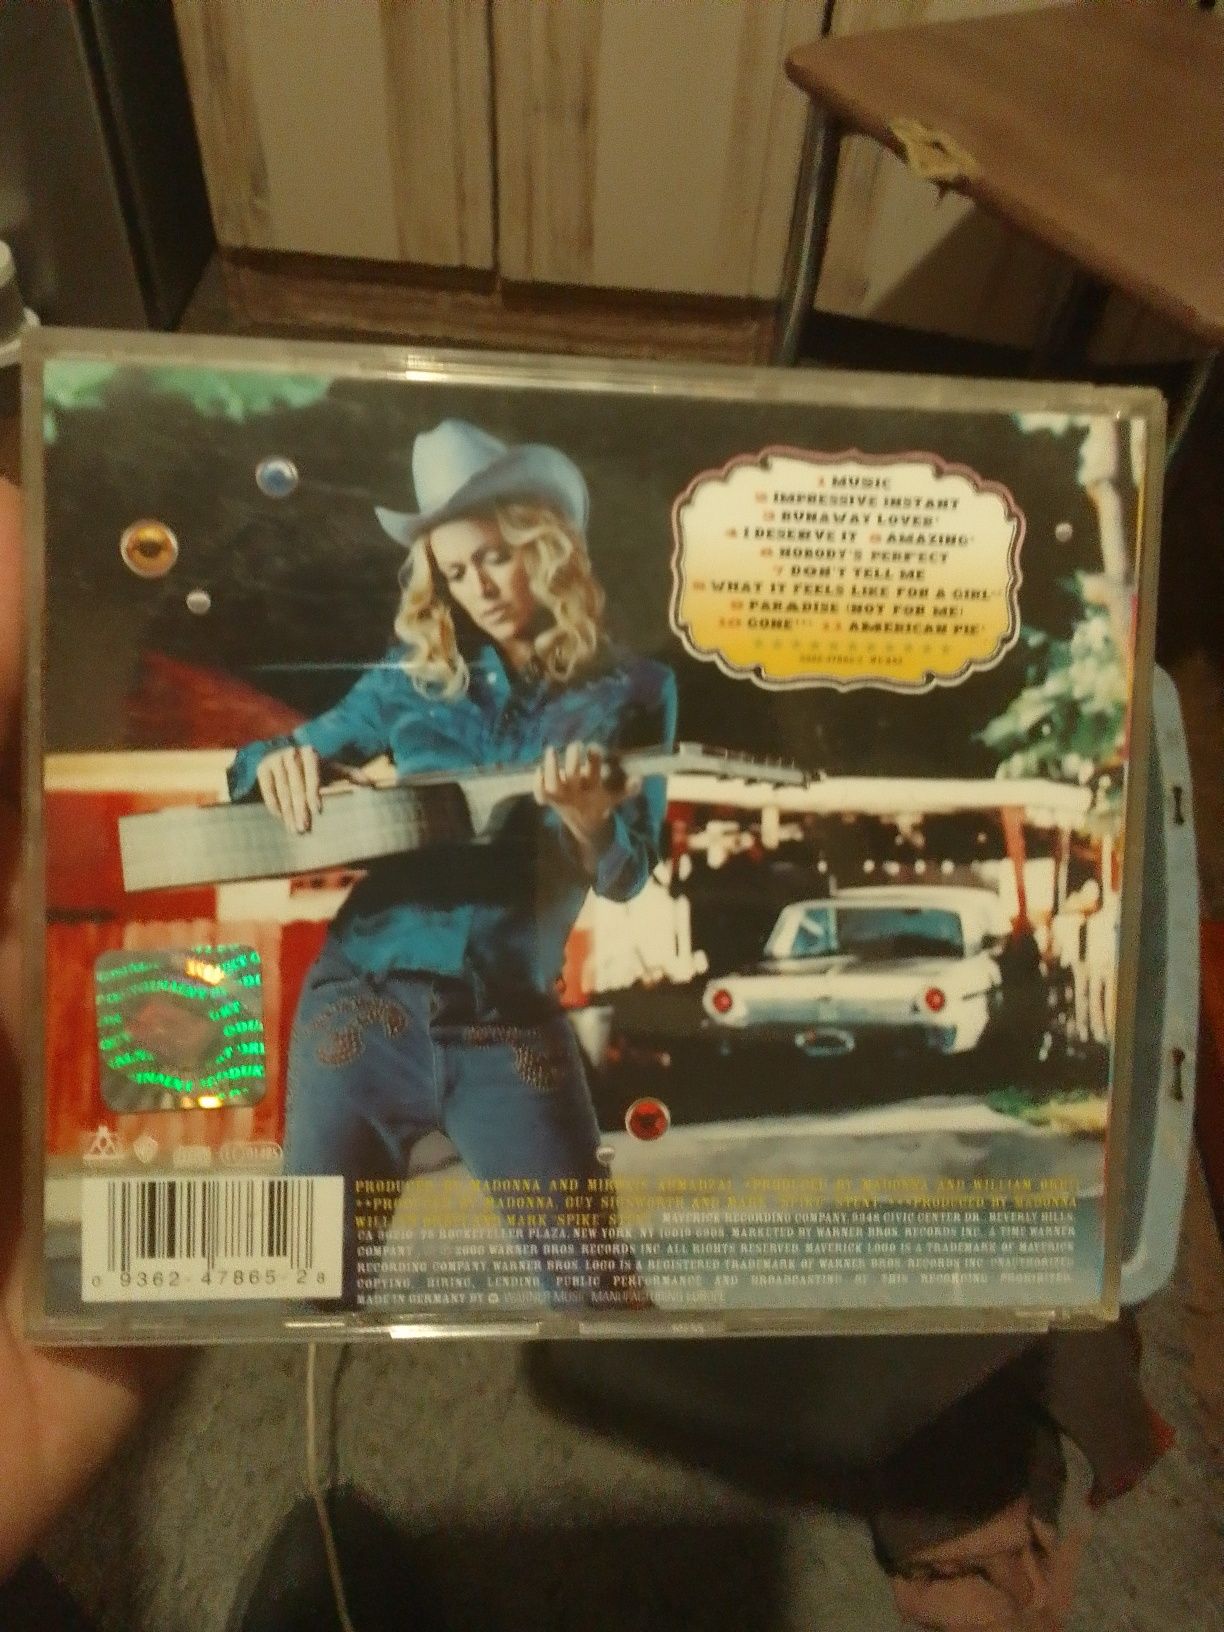 Madonna music CD